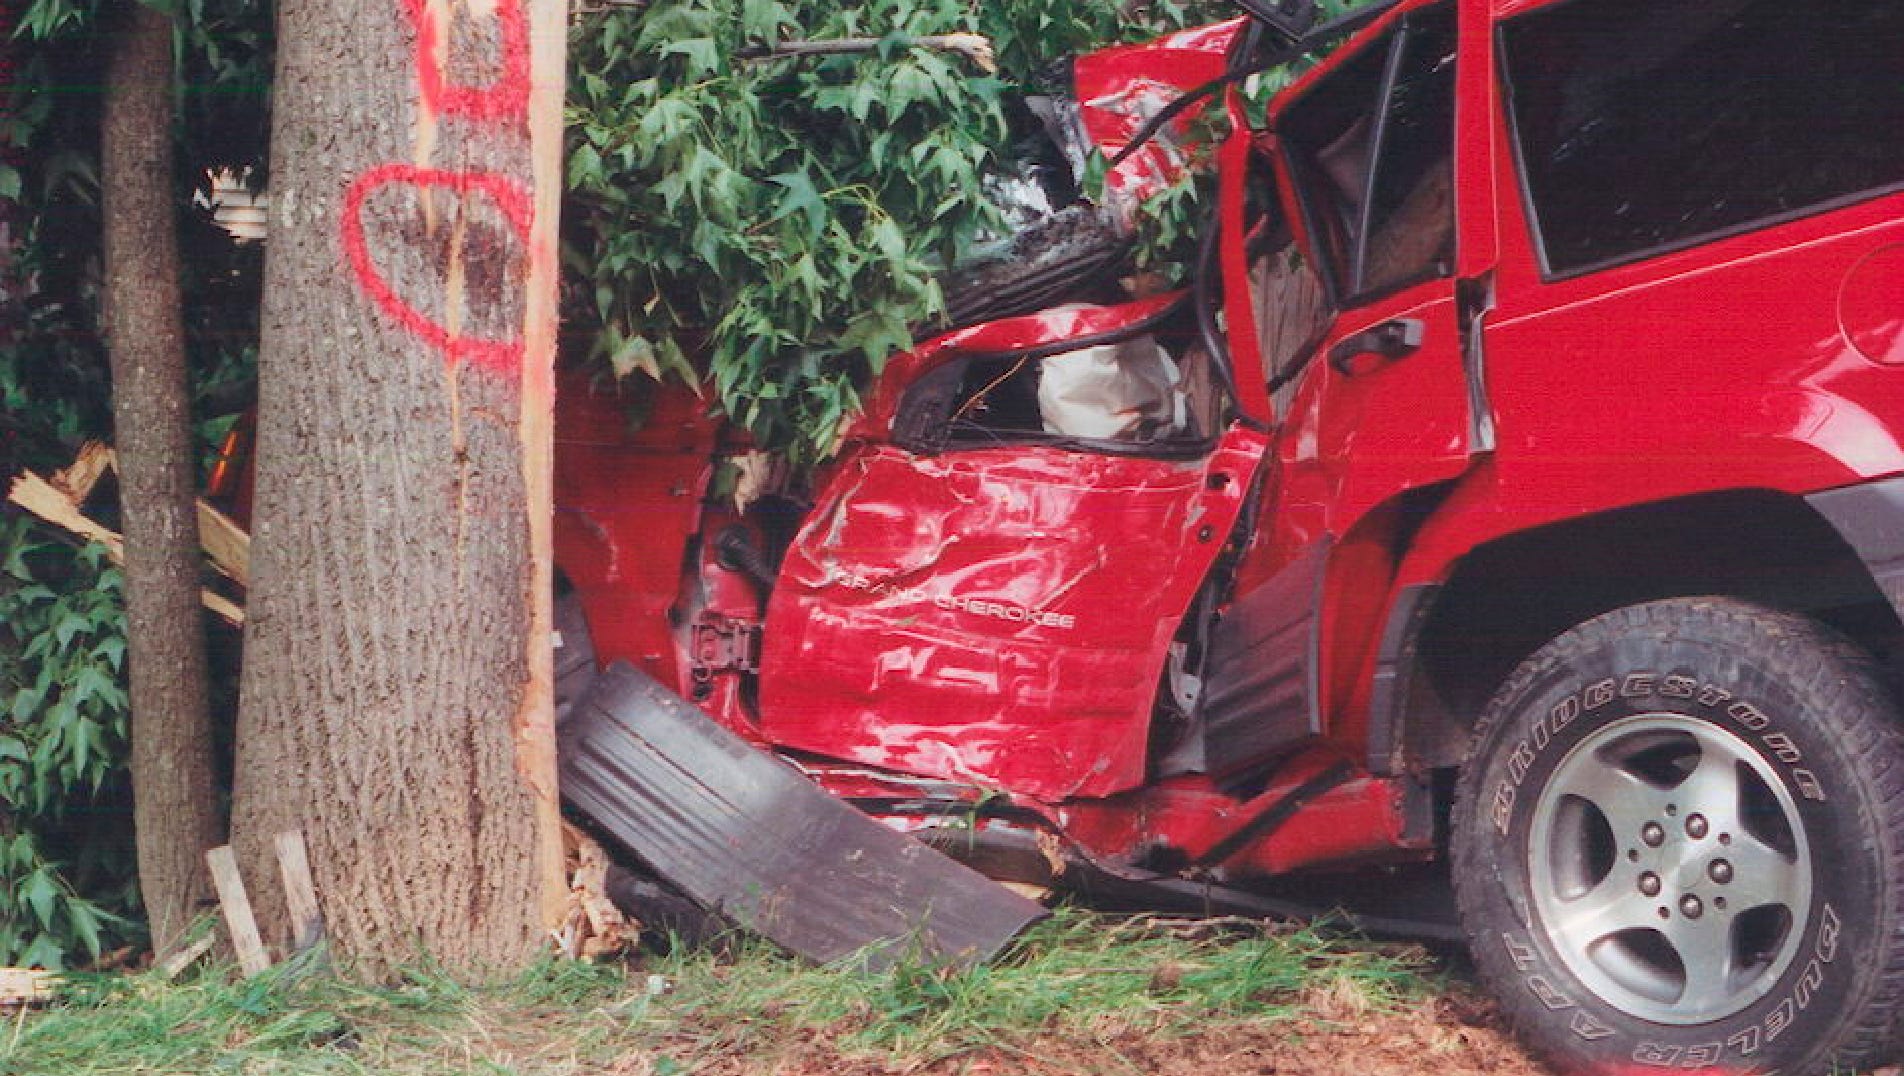 Car Crash Deaths Climb Despite Better Auto Safety